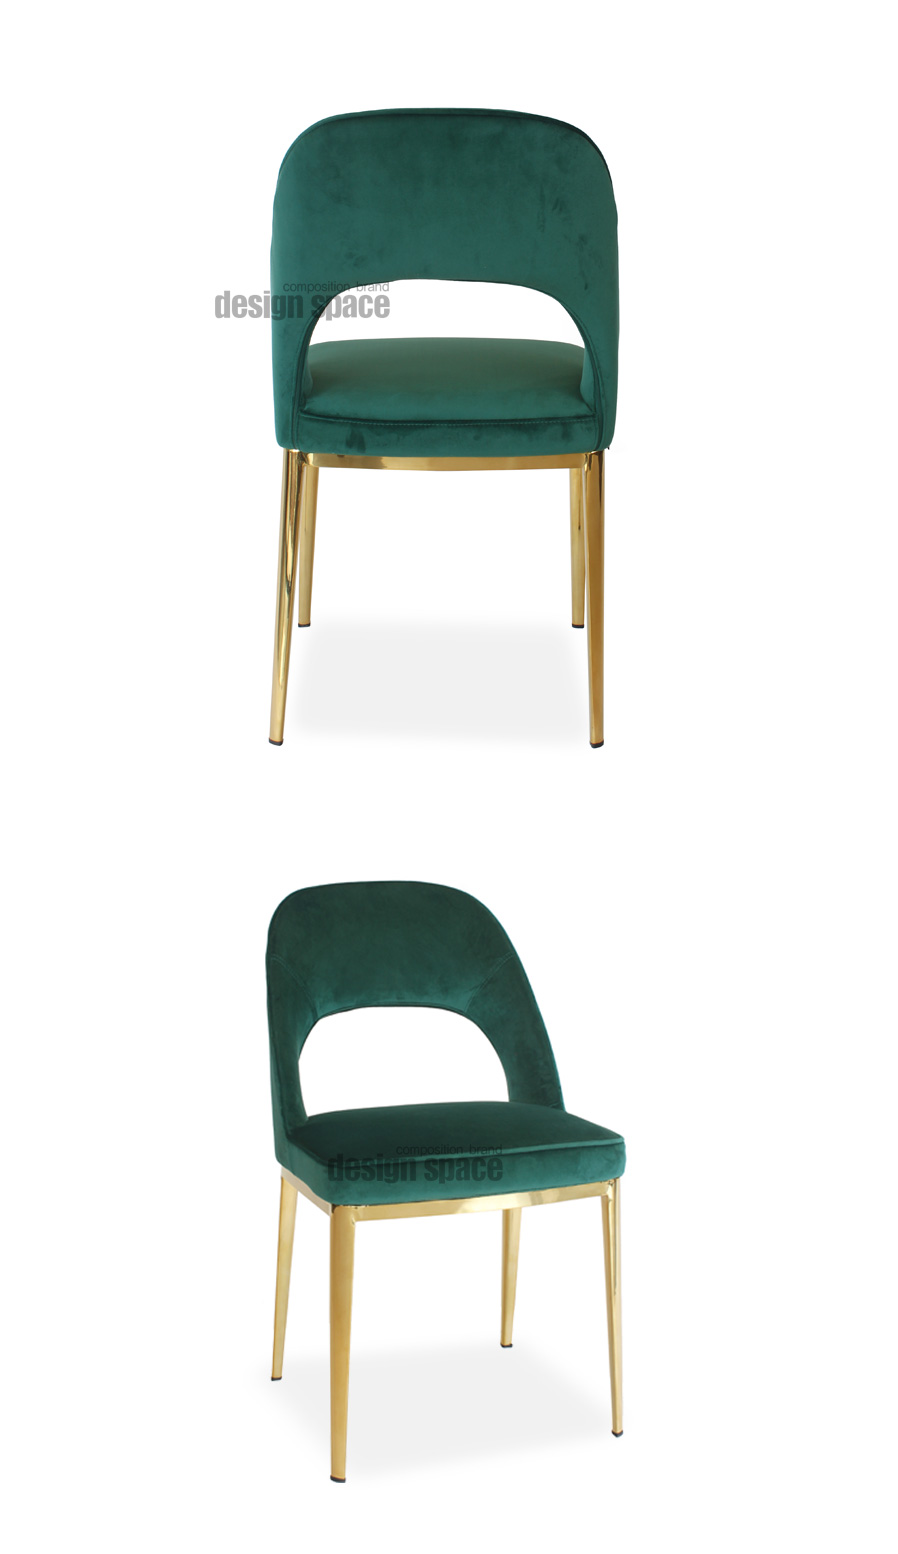 barrett-chair_02.jpg